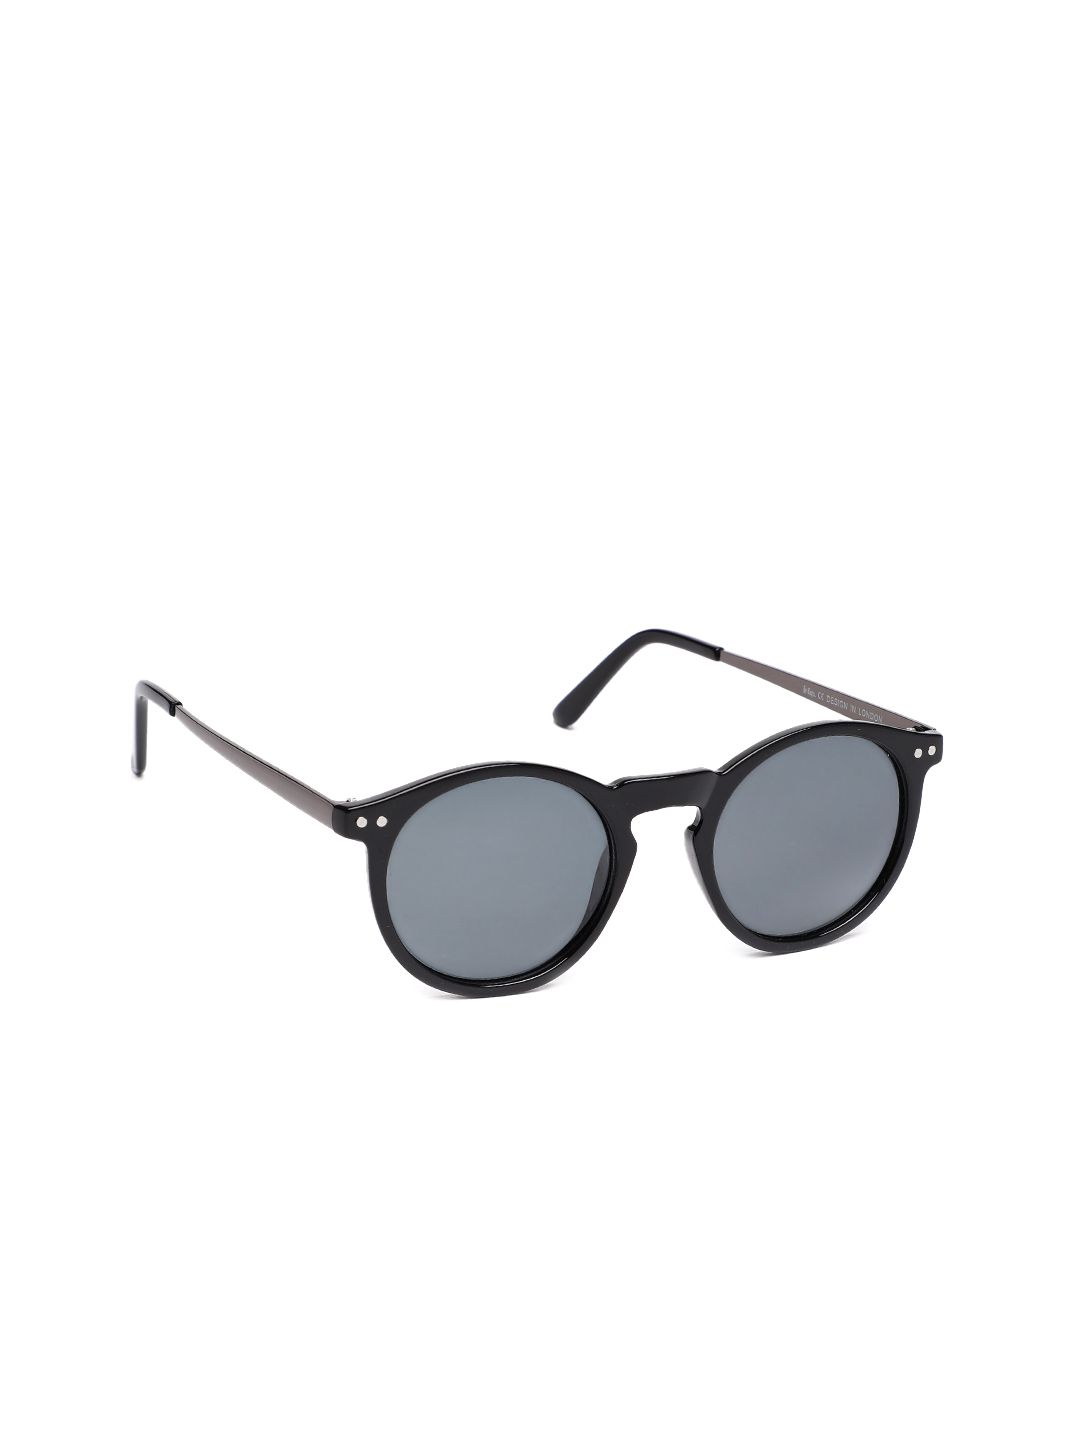 Lee Cooper Women Round Sunglasses LC9148ENB Price in India